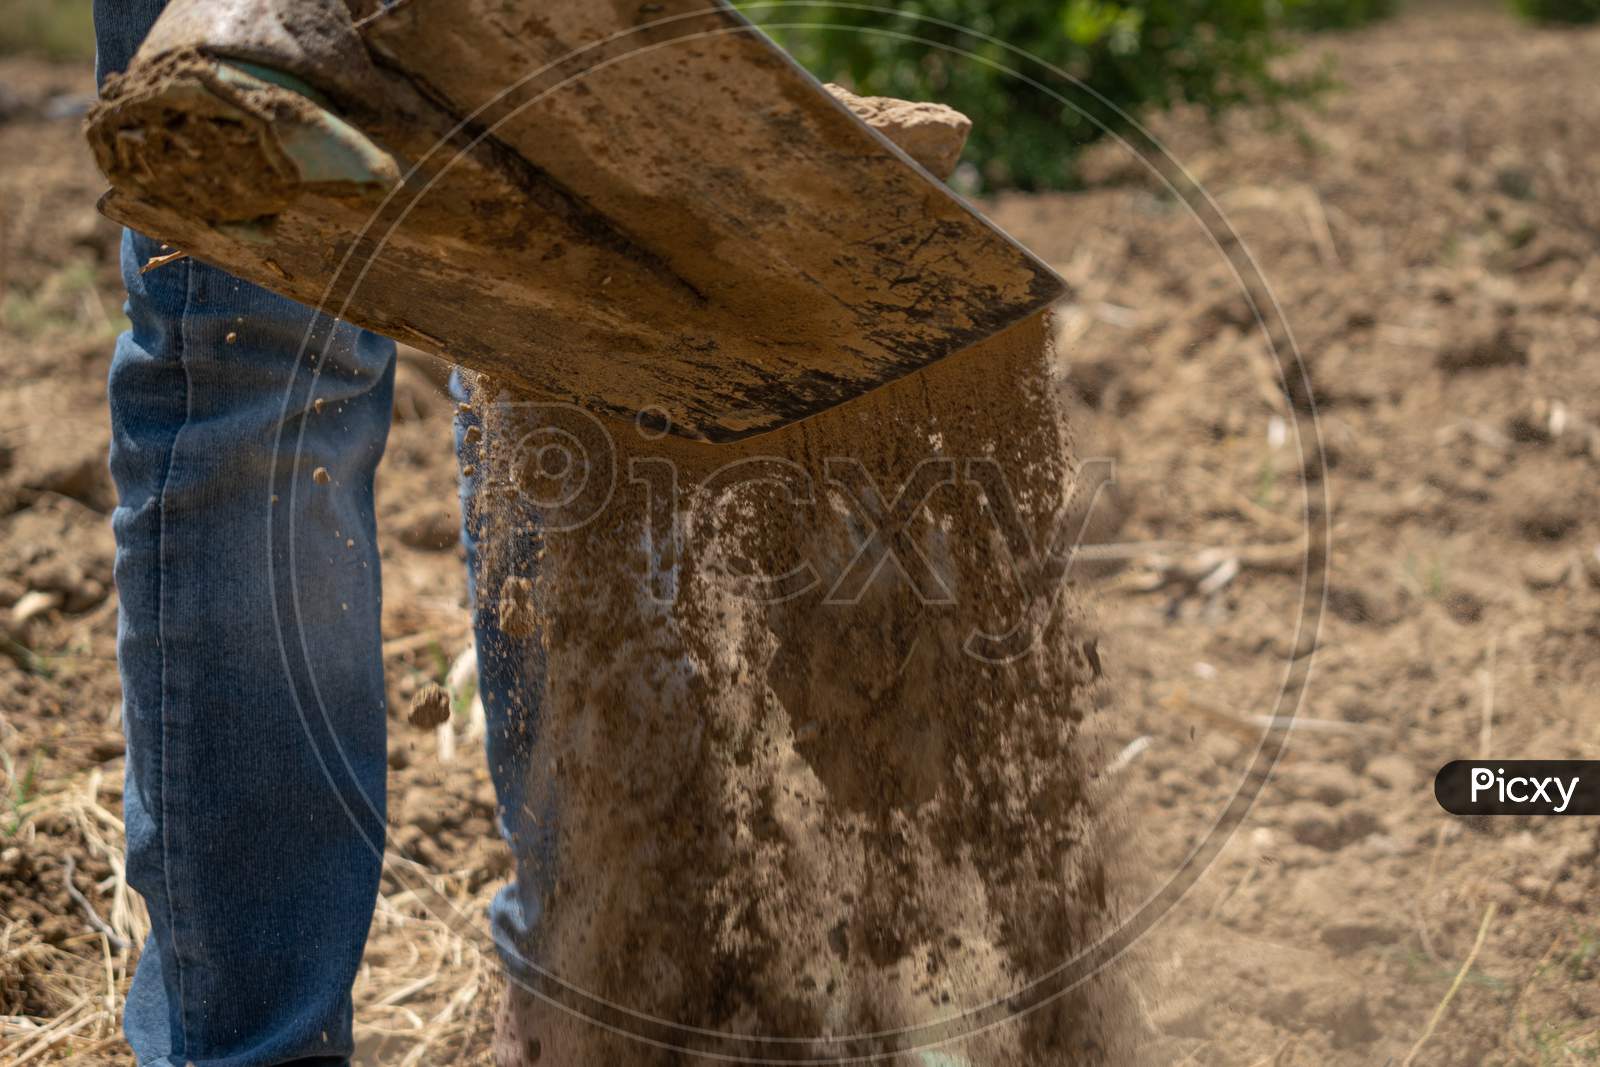 A farmer using a spade during irrigation